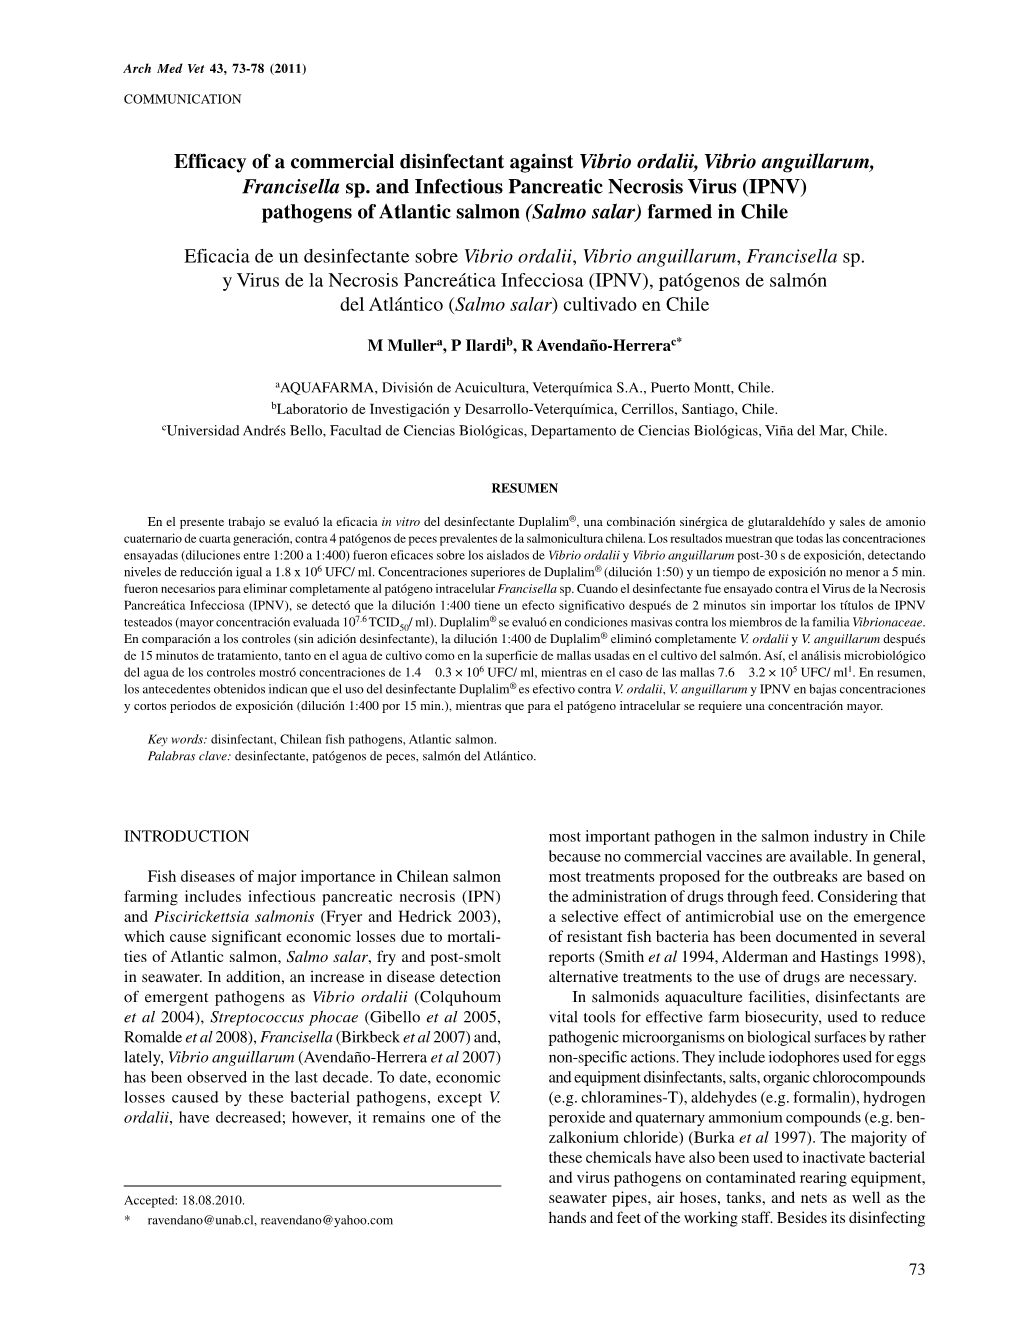 Efficacy of a Commercial Disinfectant Against Vibrio Ordalii, Vibrio Anguillarum, Francisella Sp